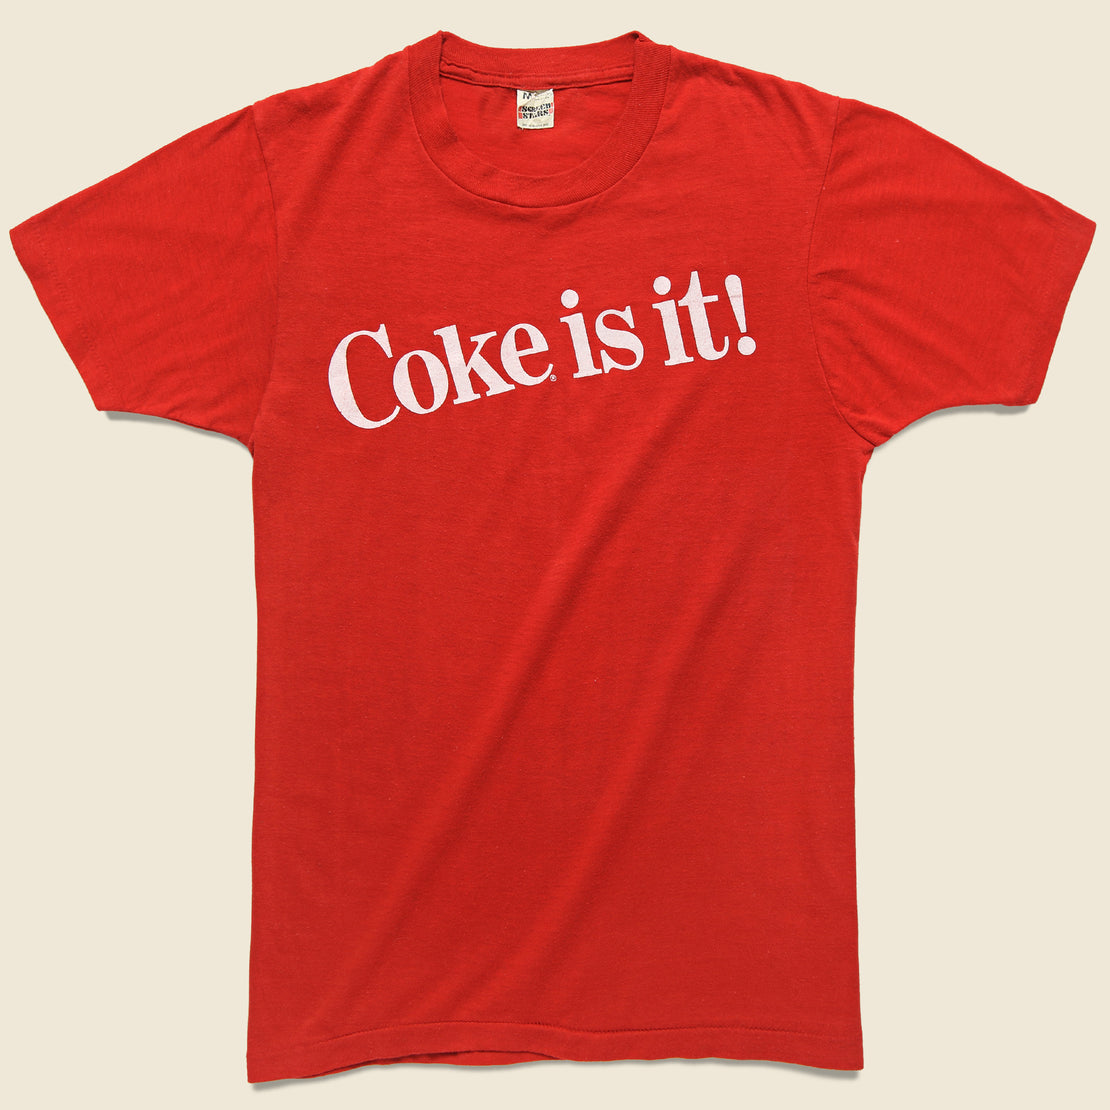 Vintage Coke is it! T-Shirt - Red